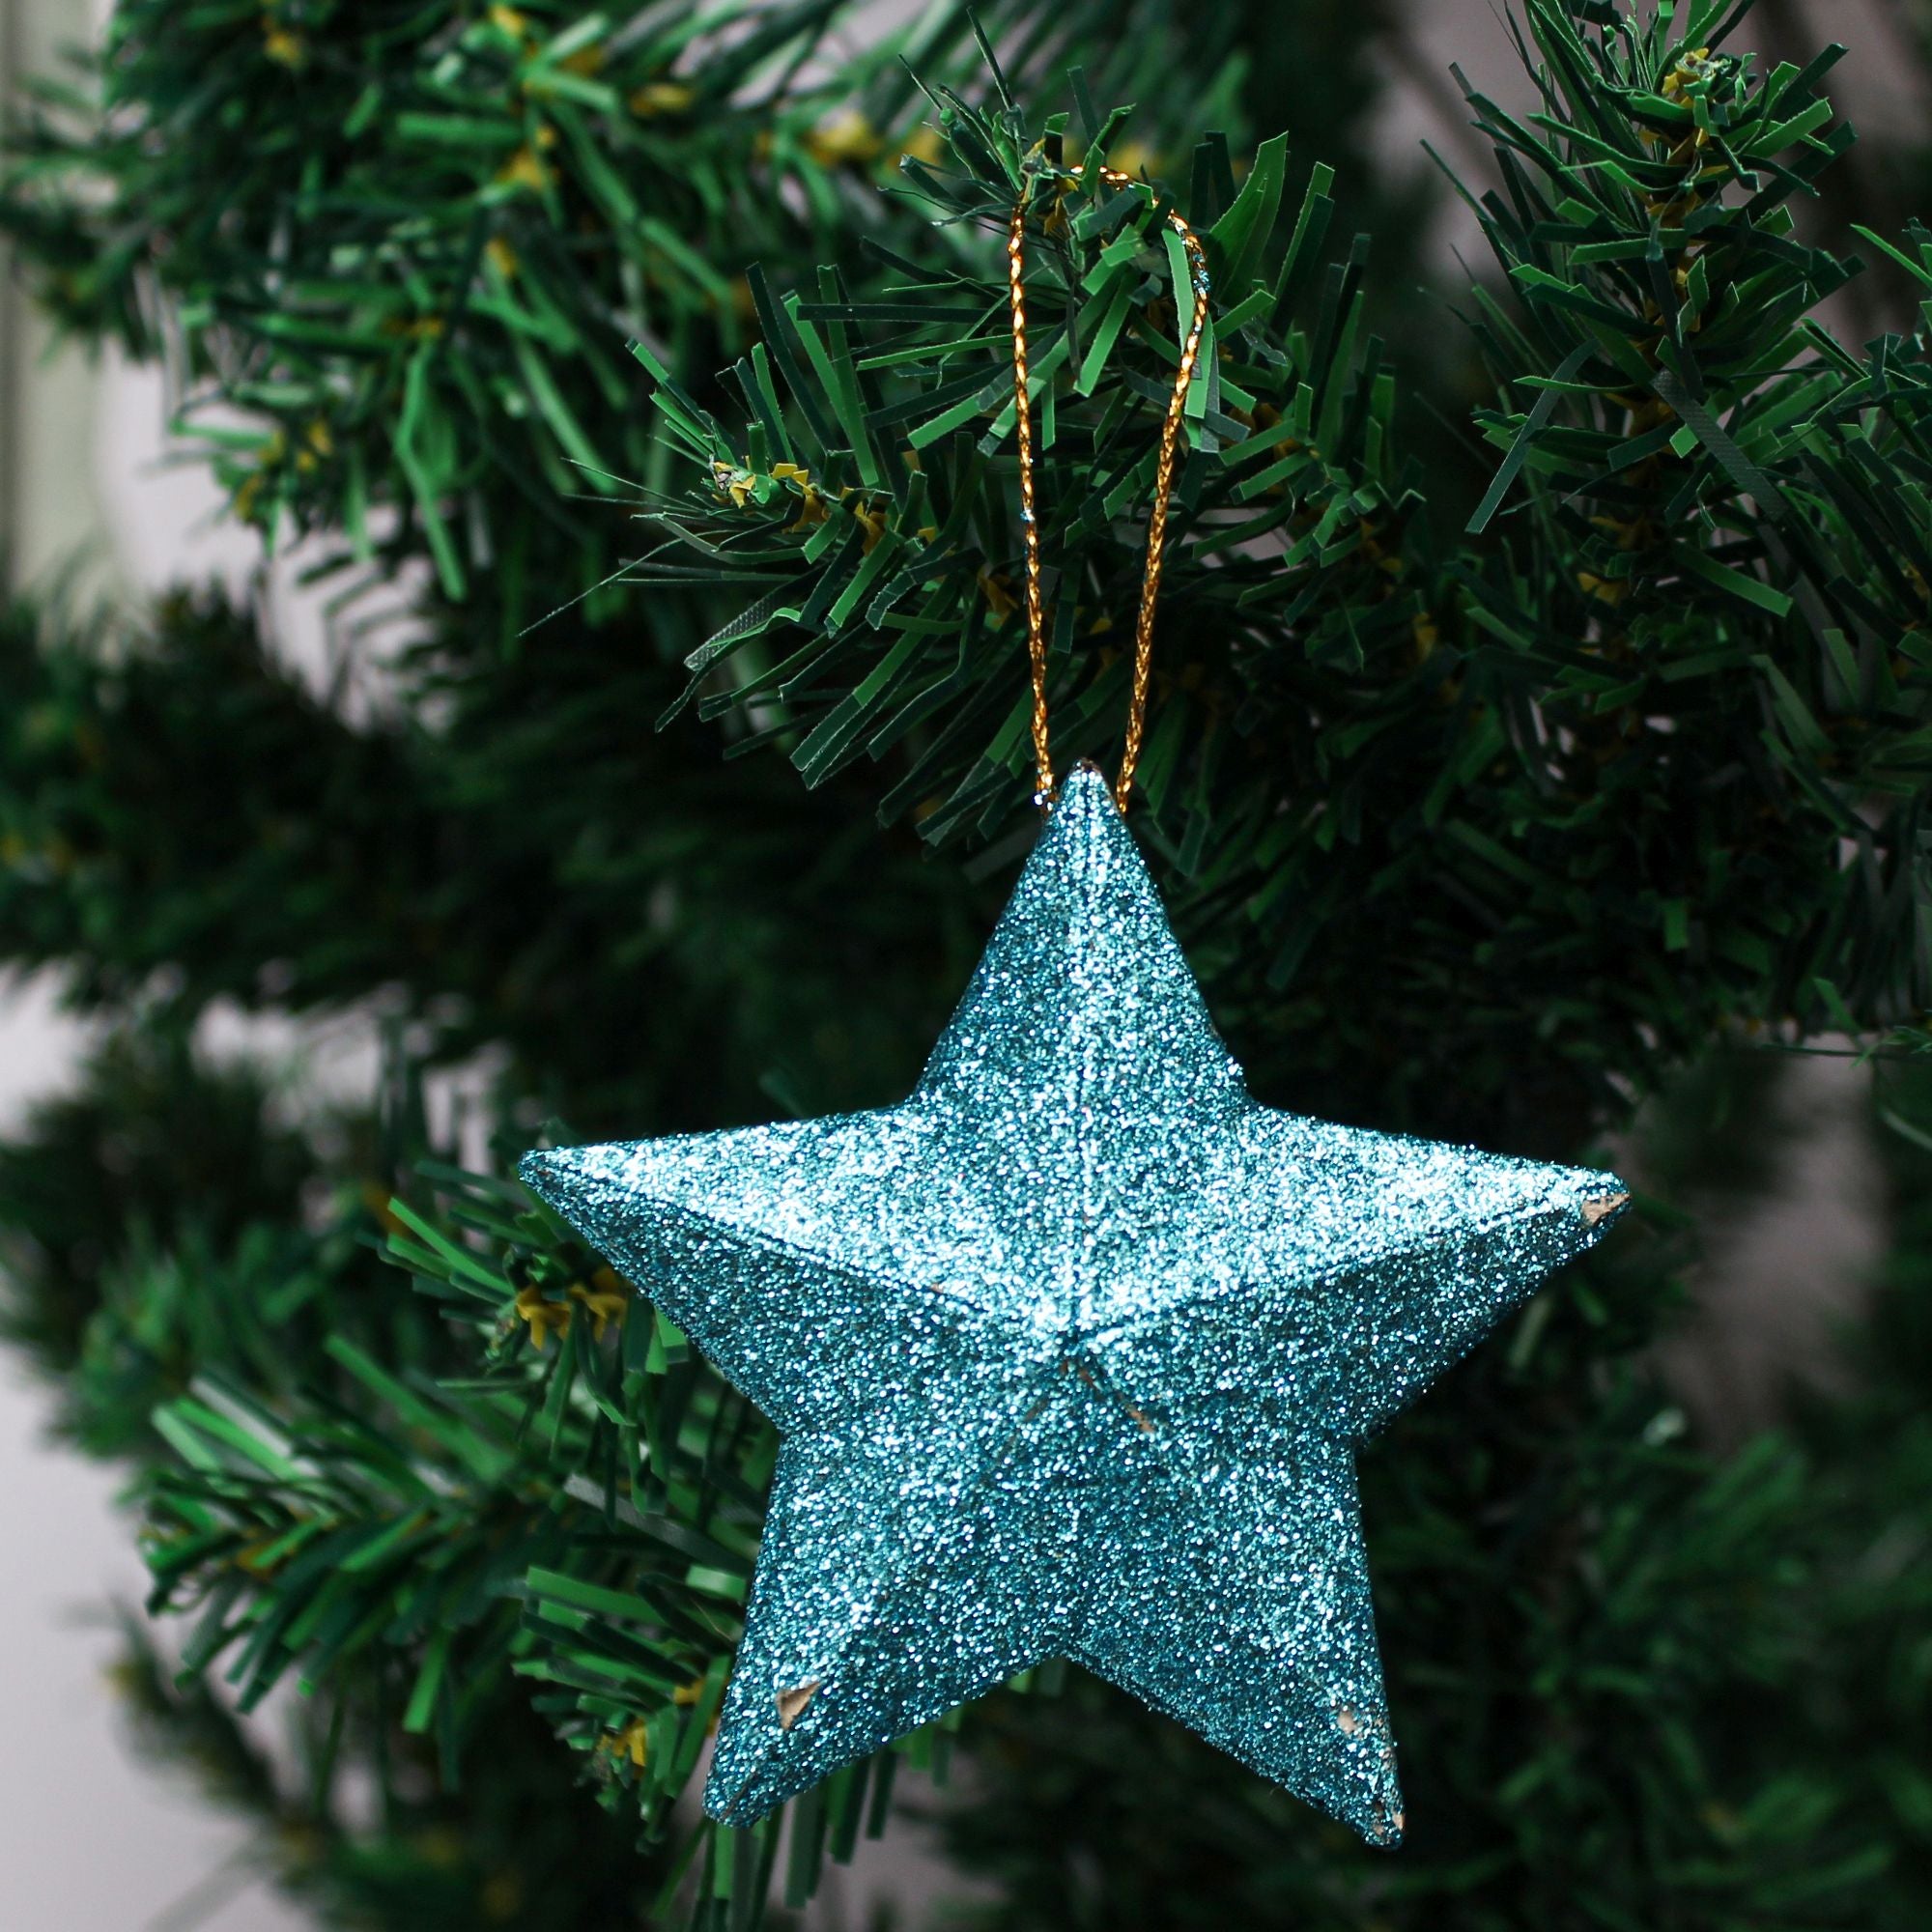 Handmade Christmas Ornaments - 3D Glitter Stars, 3.25inch, Blue, 4pc